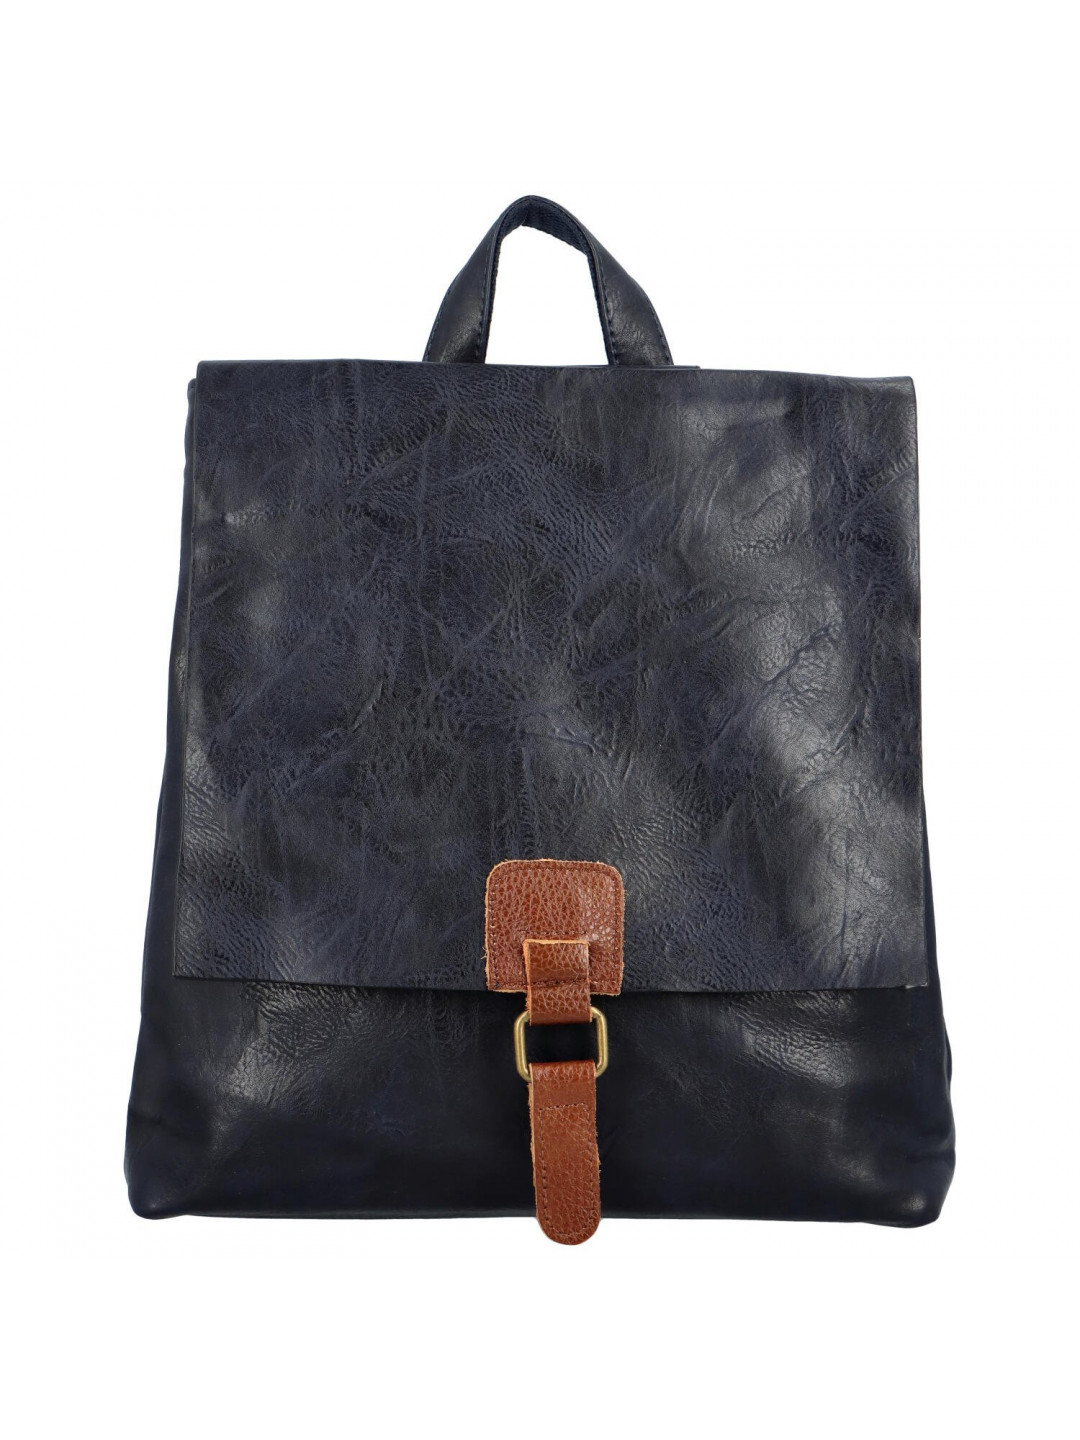 Dámský kabelko batoh tmavě modrý – Paolo bags Olefir